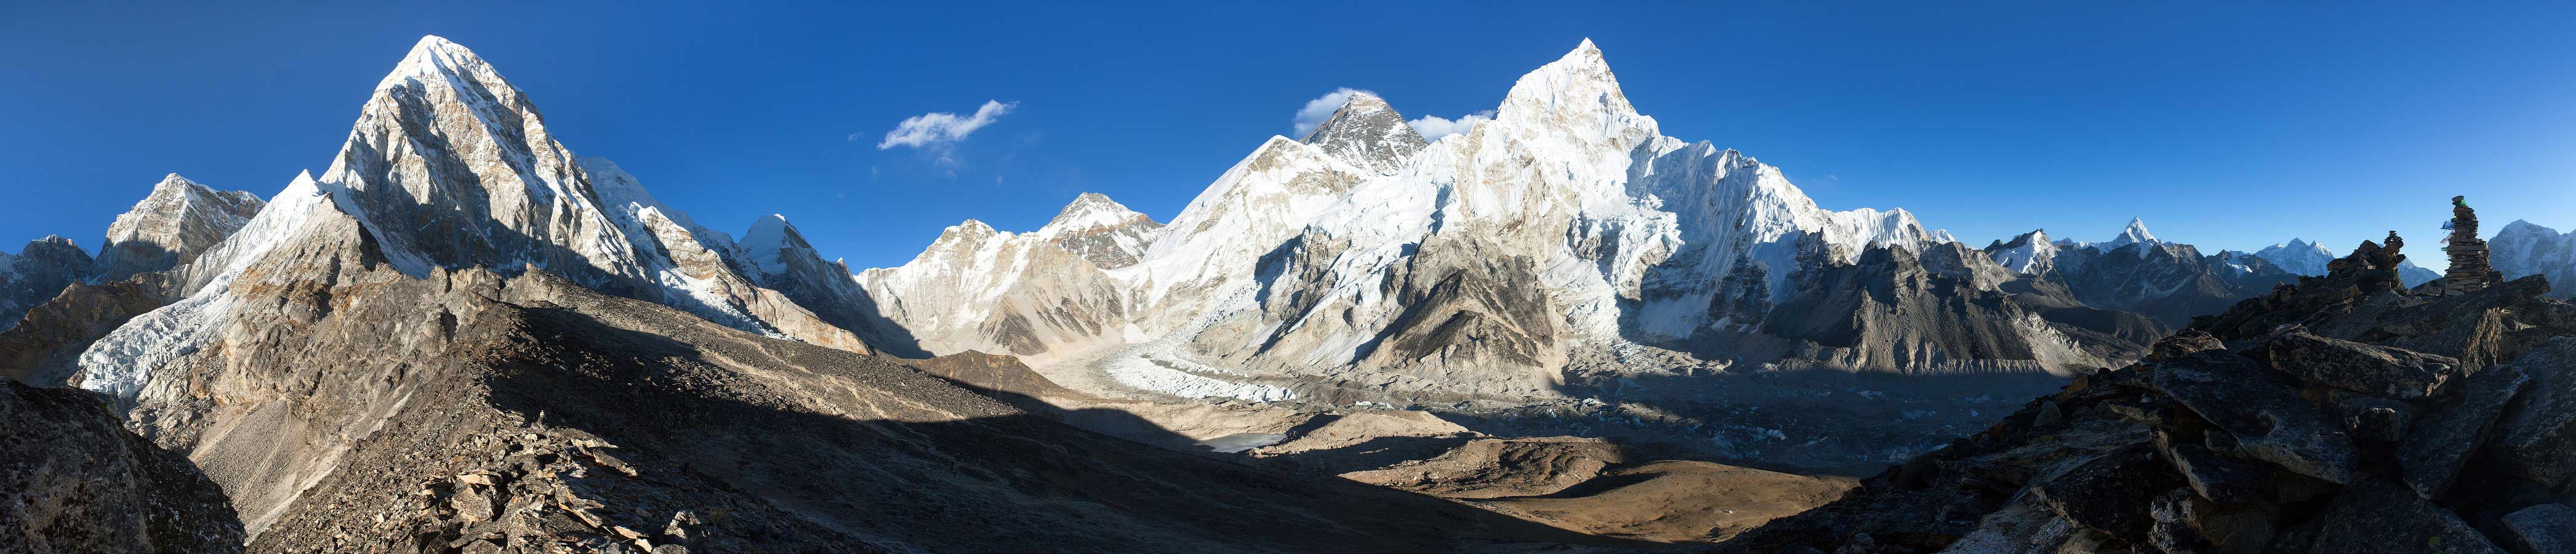 Everest region himalayas 